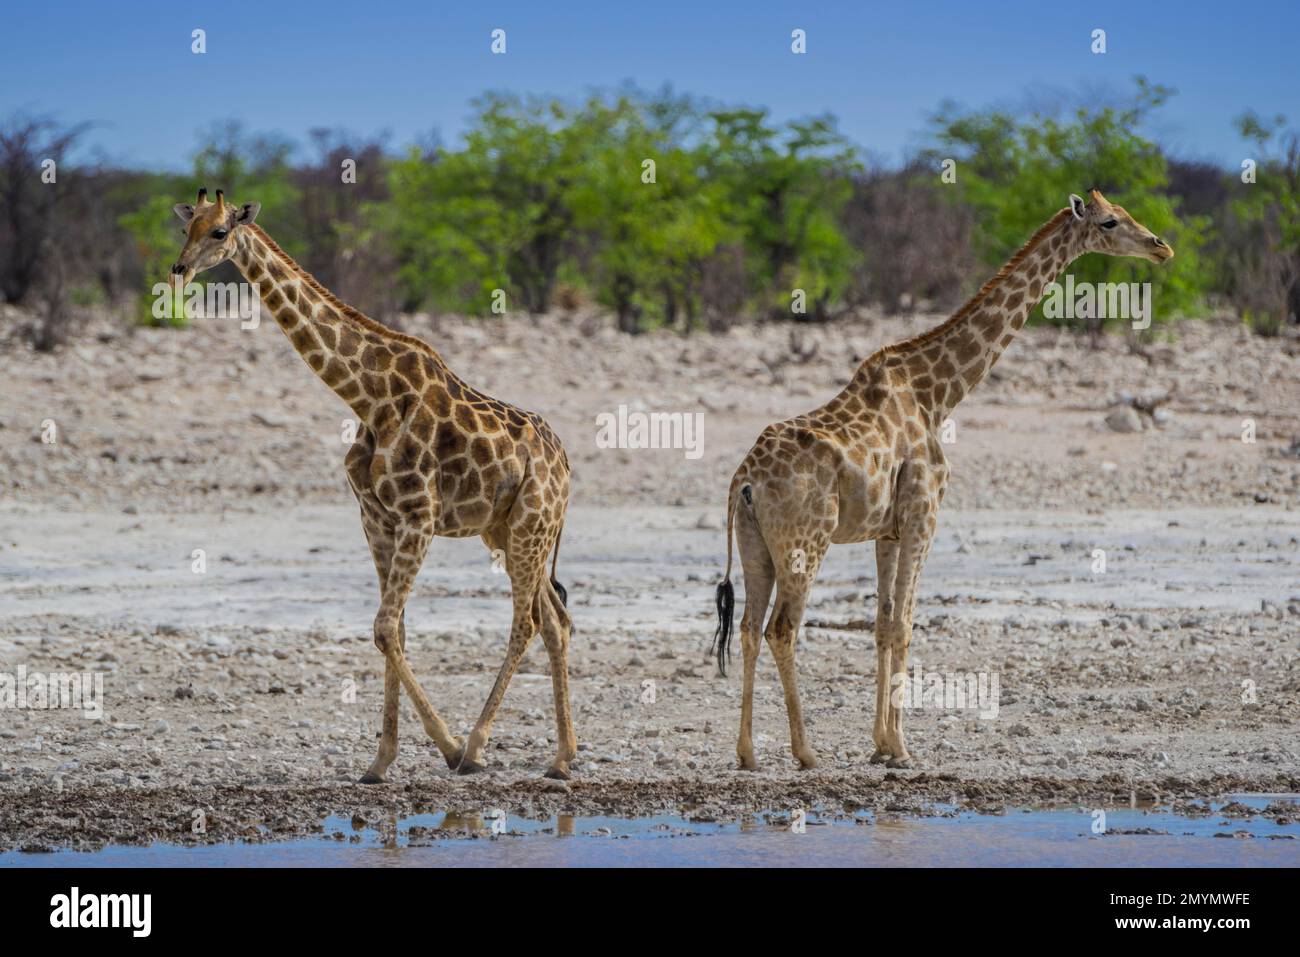 Two angolan giraffes (Giraffa camelopardalis angolensis) at a waterhole, Etosha National Park, Namibia, Africa Stock Photo